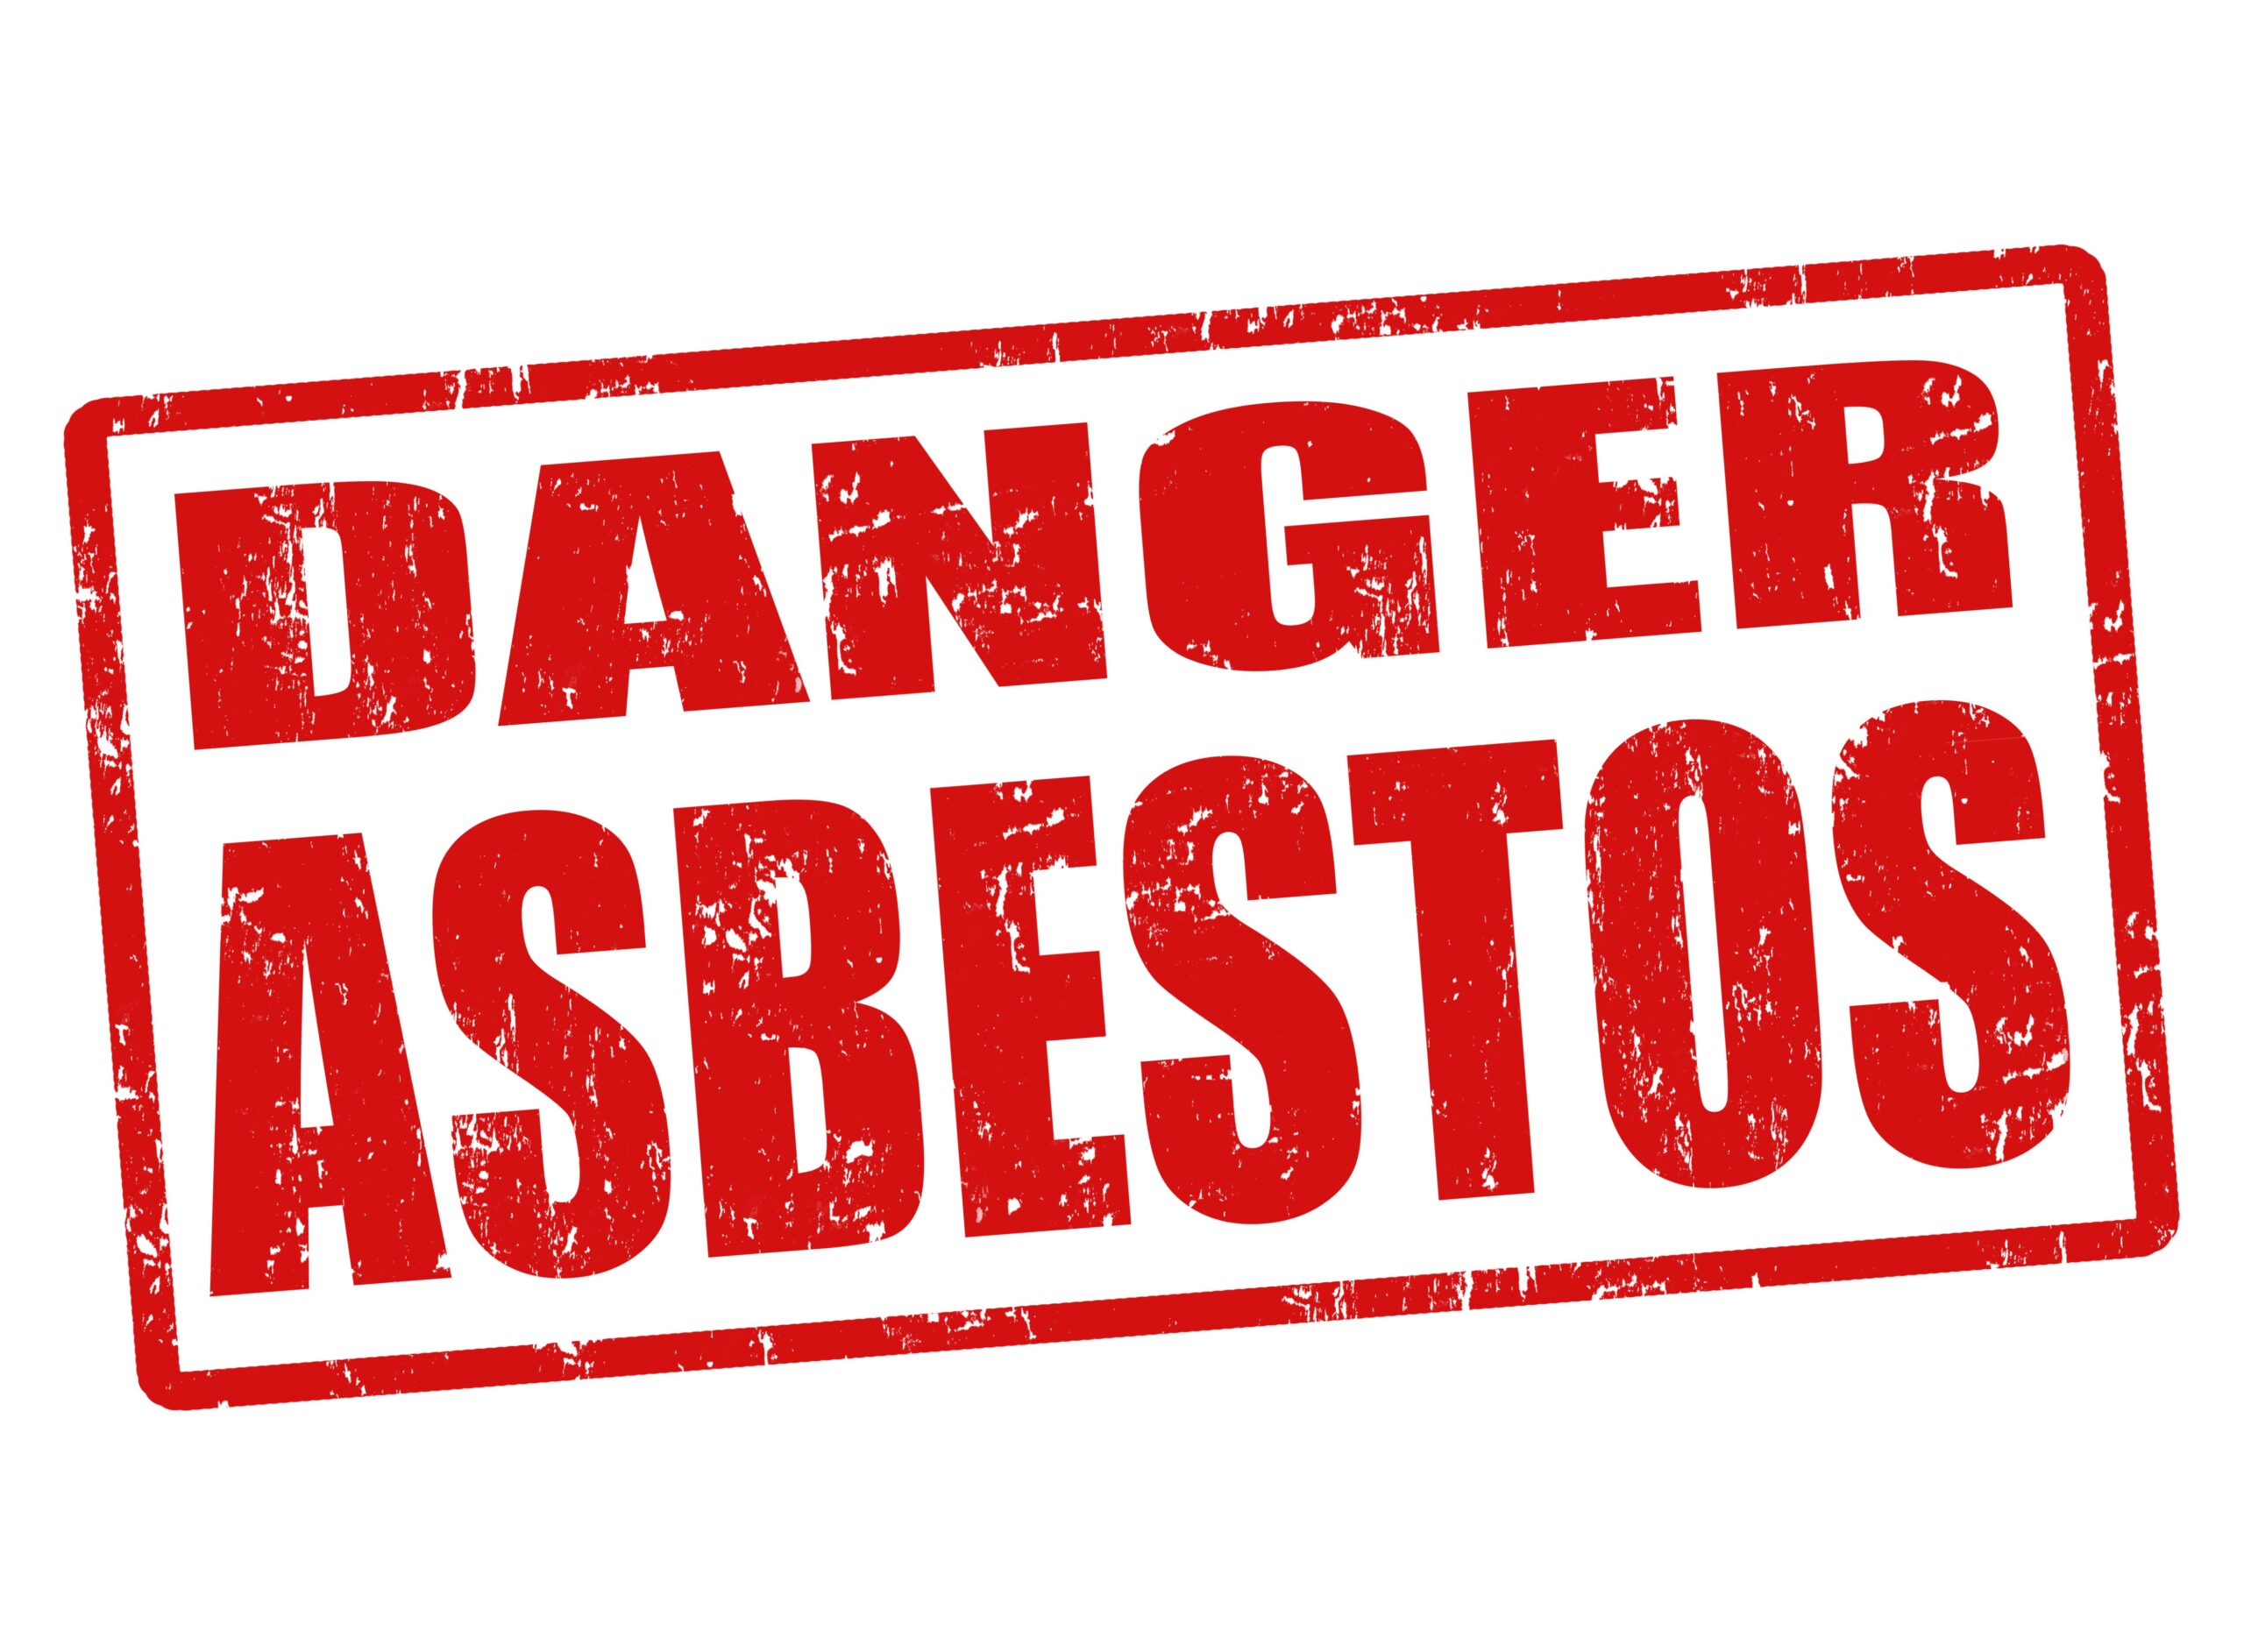 Asbestos Jobsite in New York